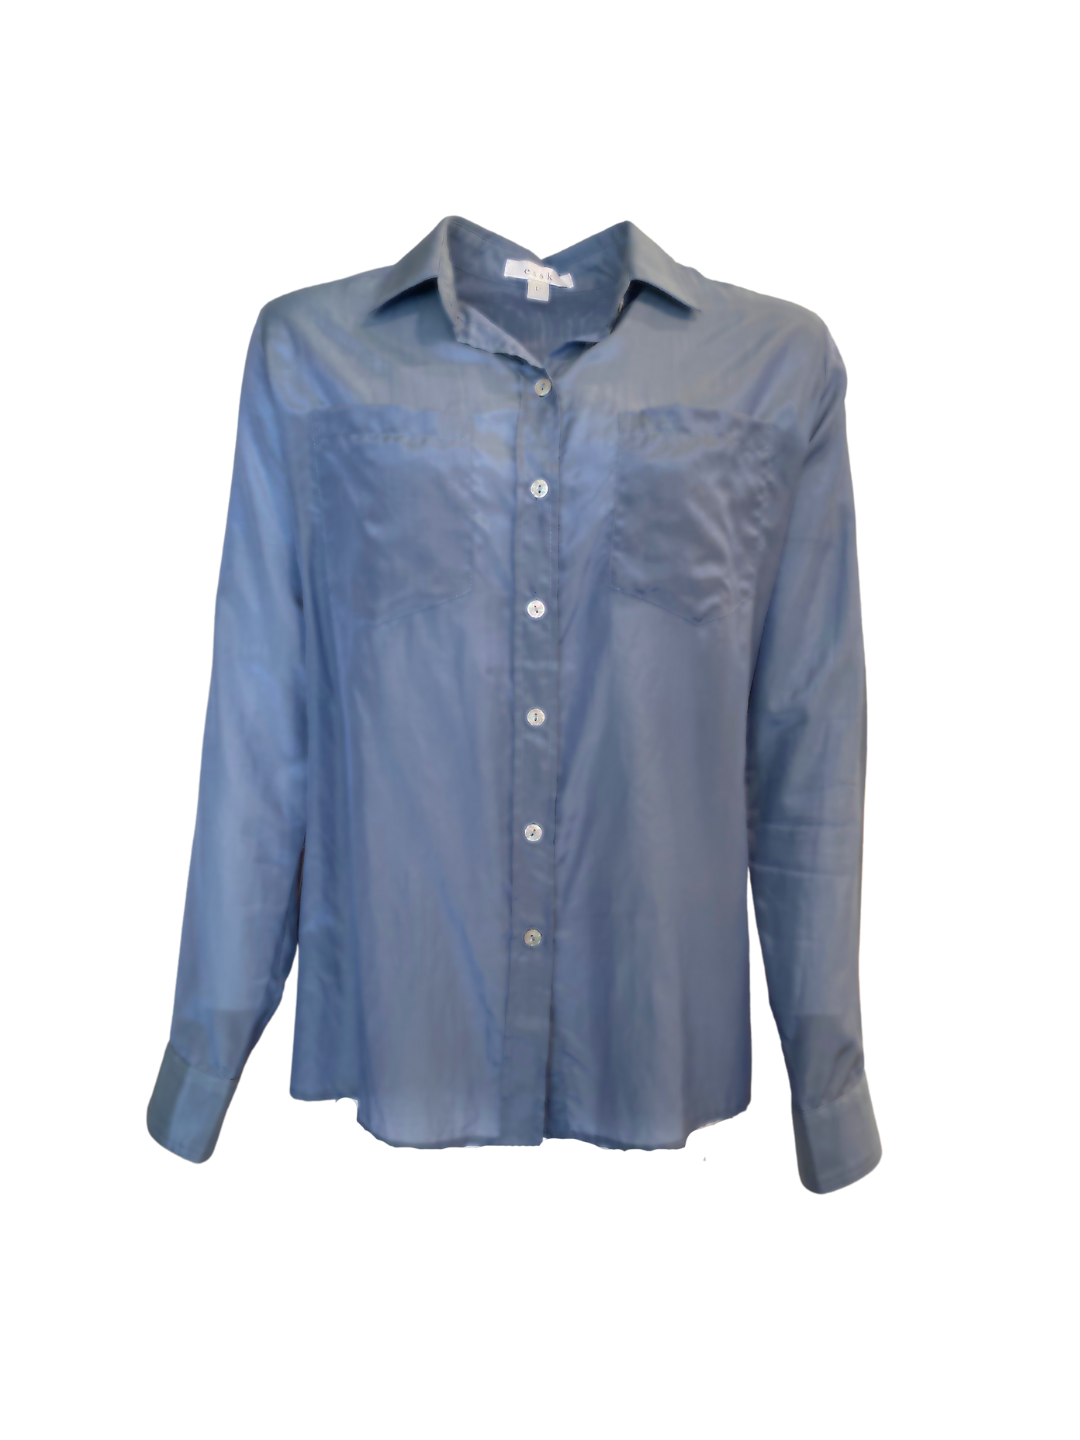 Pocket Shirt (Steel Blue)